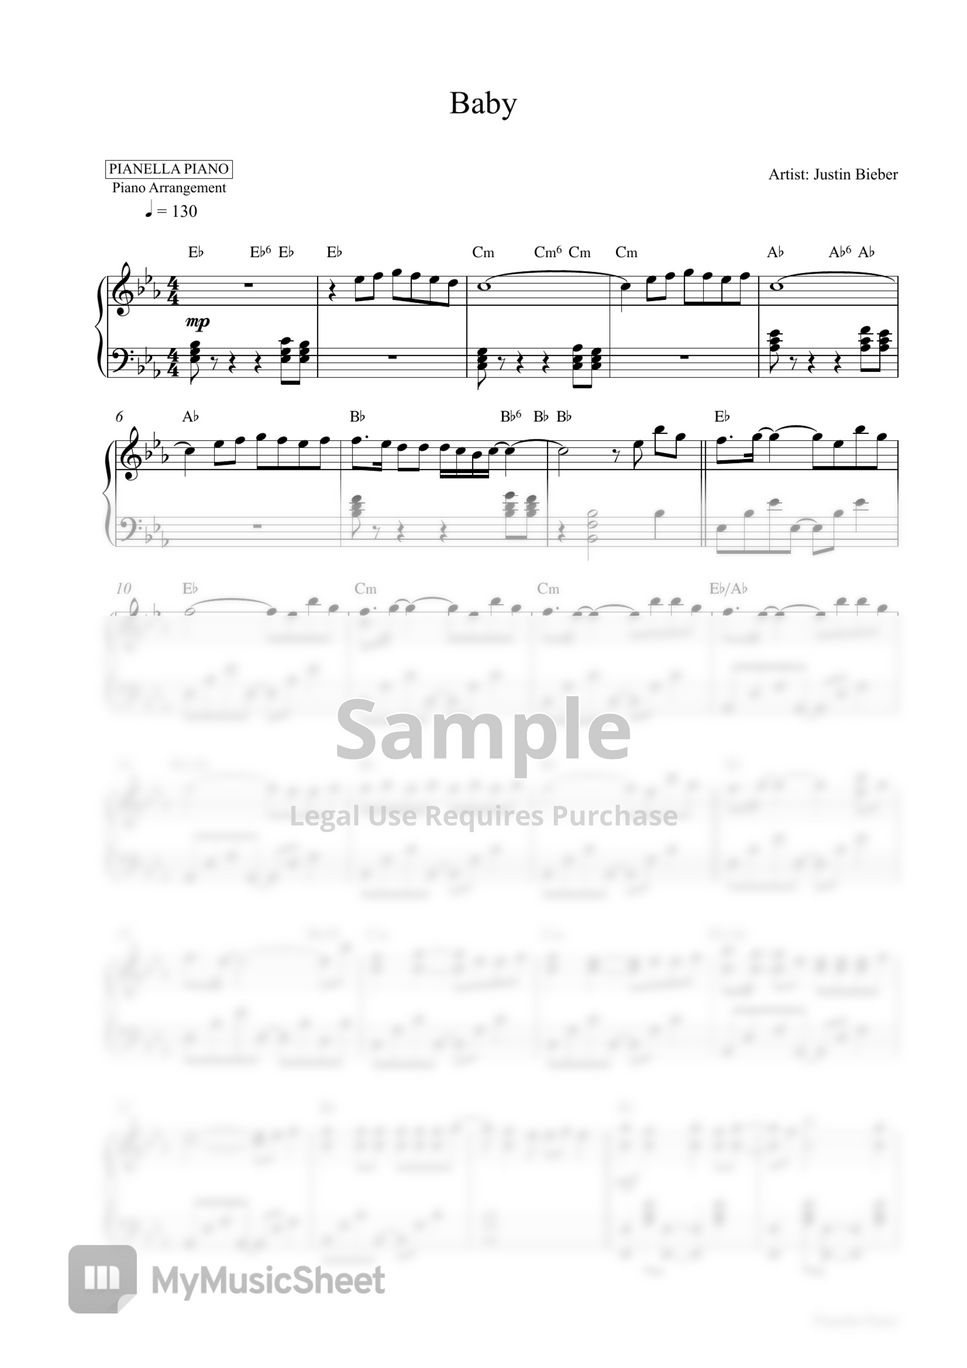 Justin Bieber - Baby (Piano Sheet) by Pianella Piano